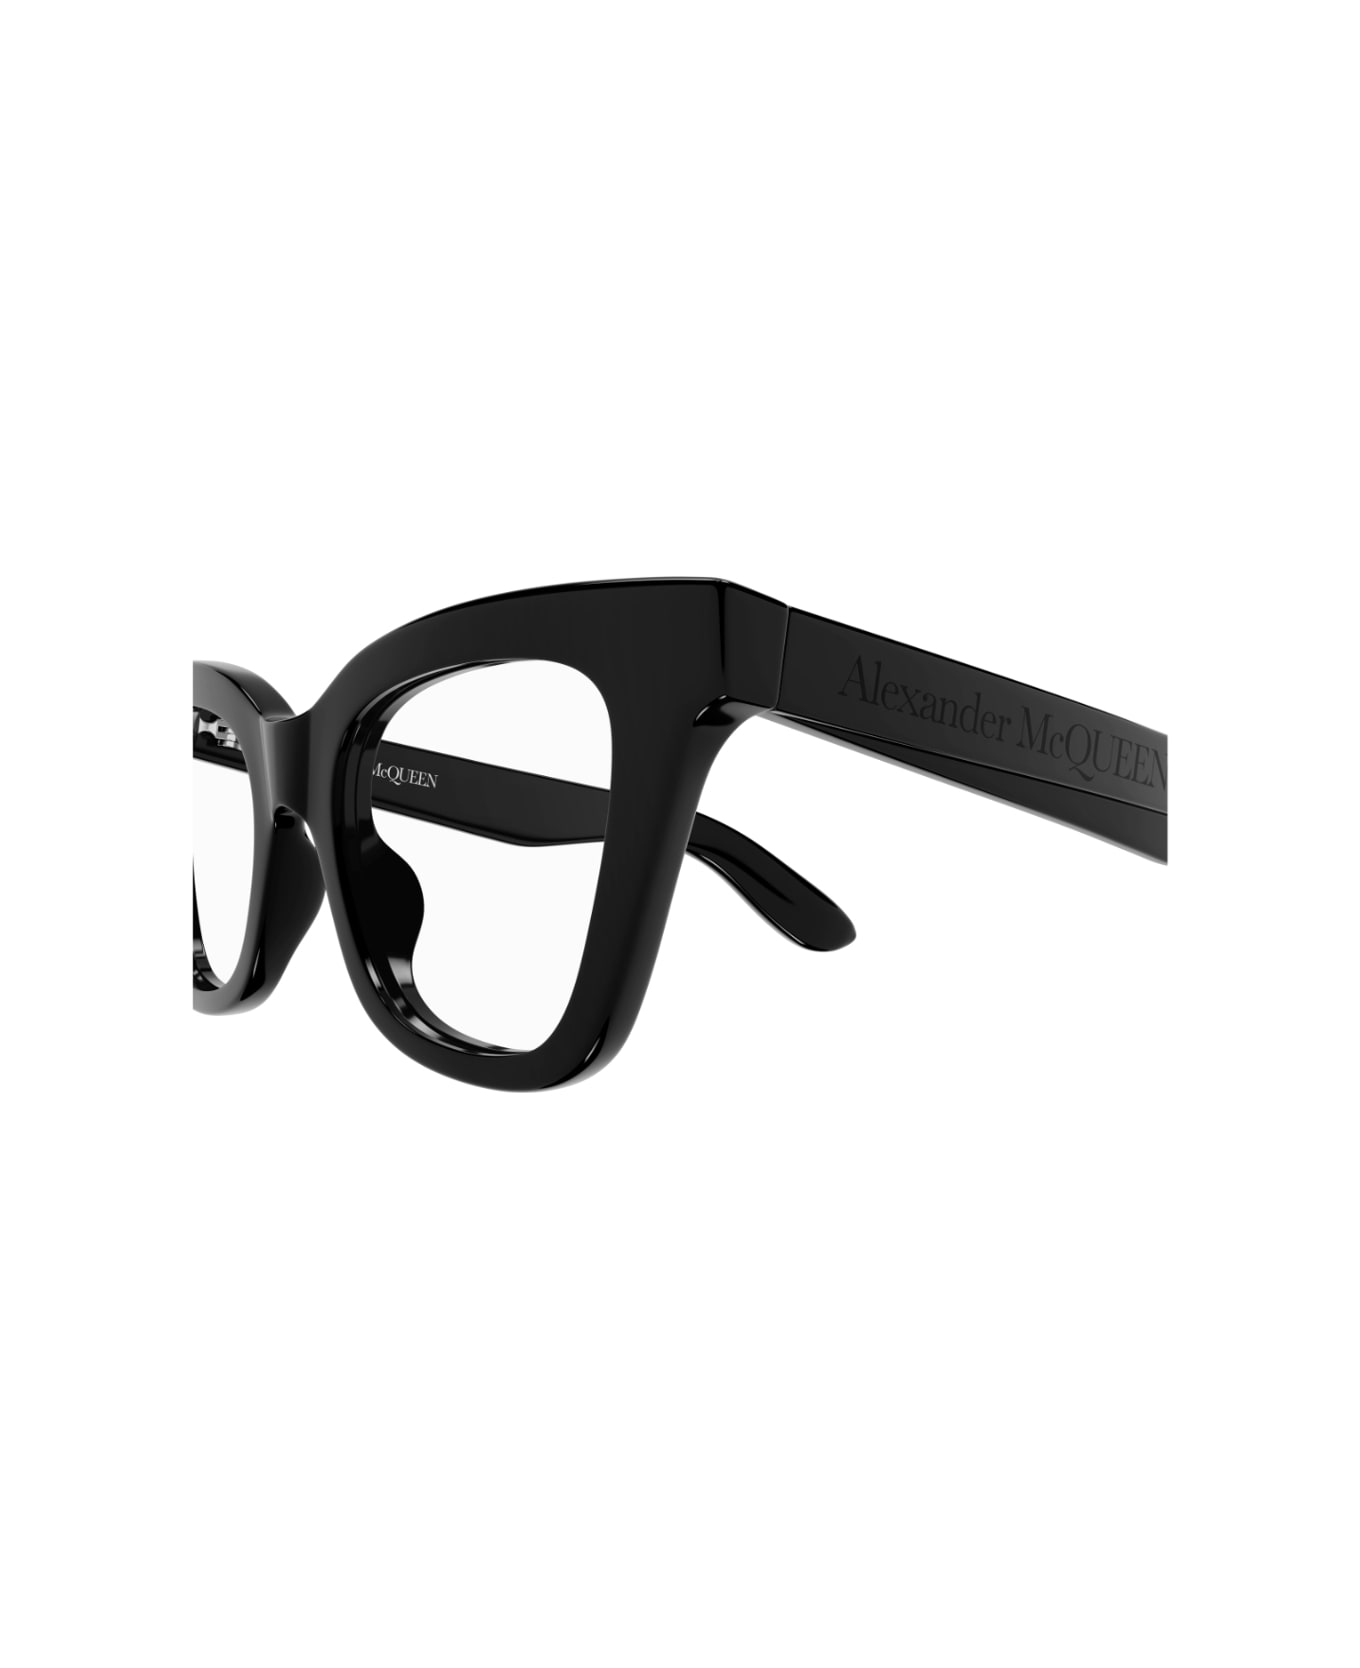 Alexander McQueen Eyewear AM0394o 001 Glasses